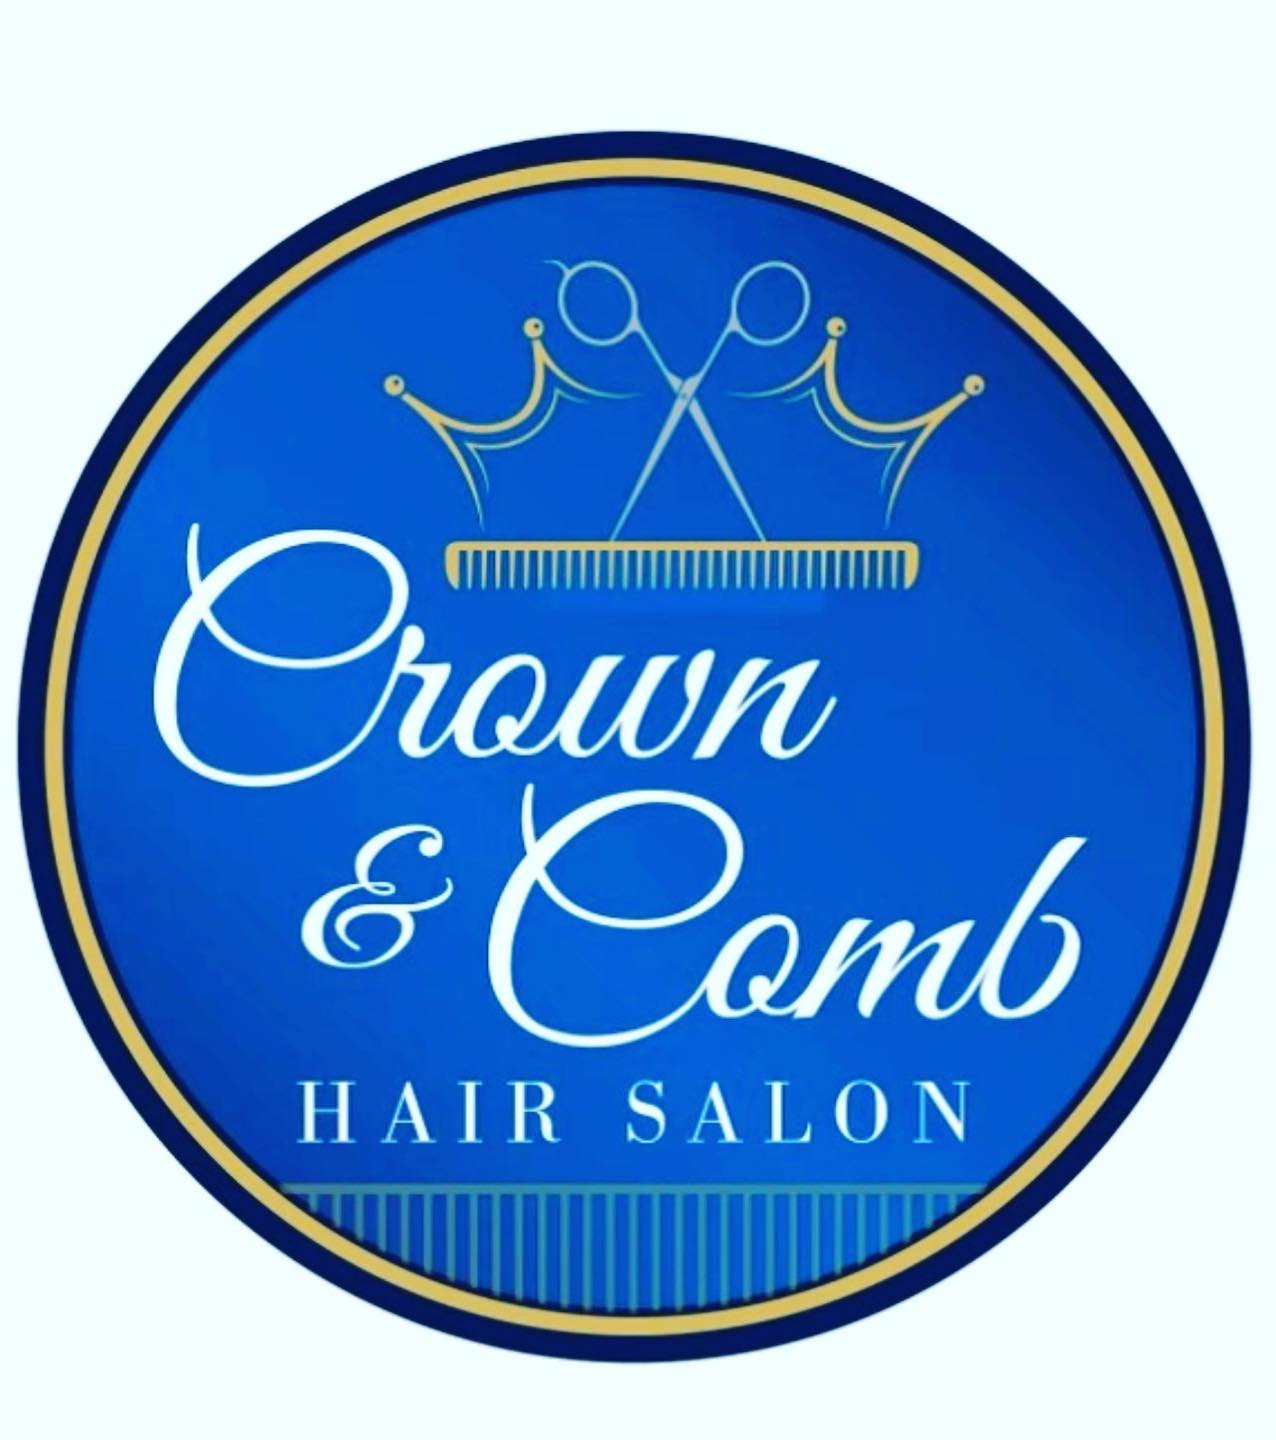 Crown & Comb Hair salon 1051 Logan Ave, Tyrone Pennsylvania 16686